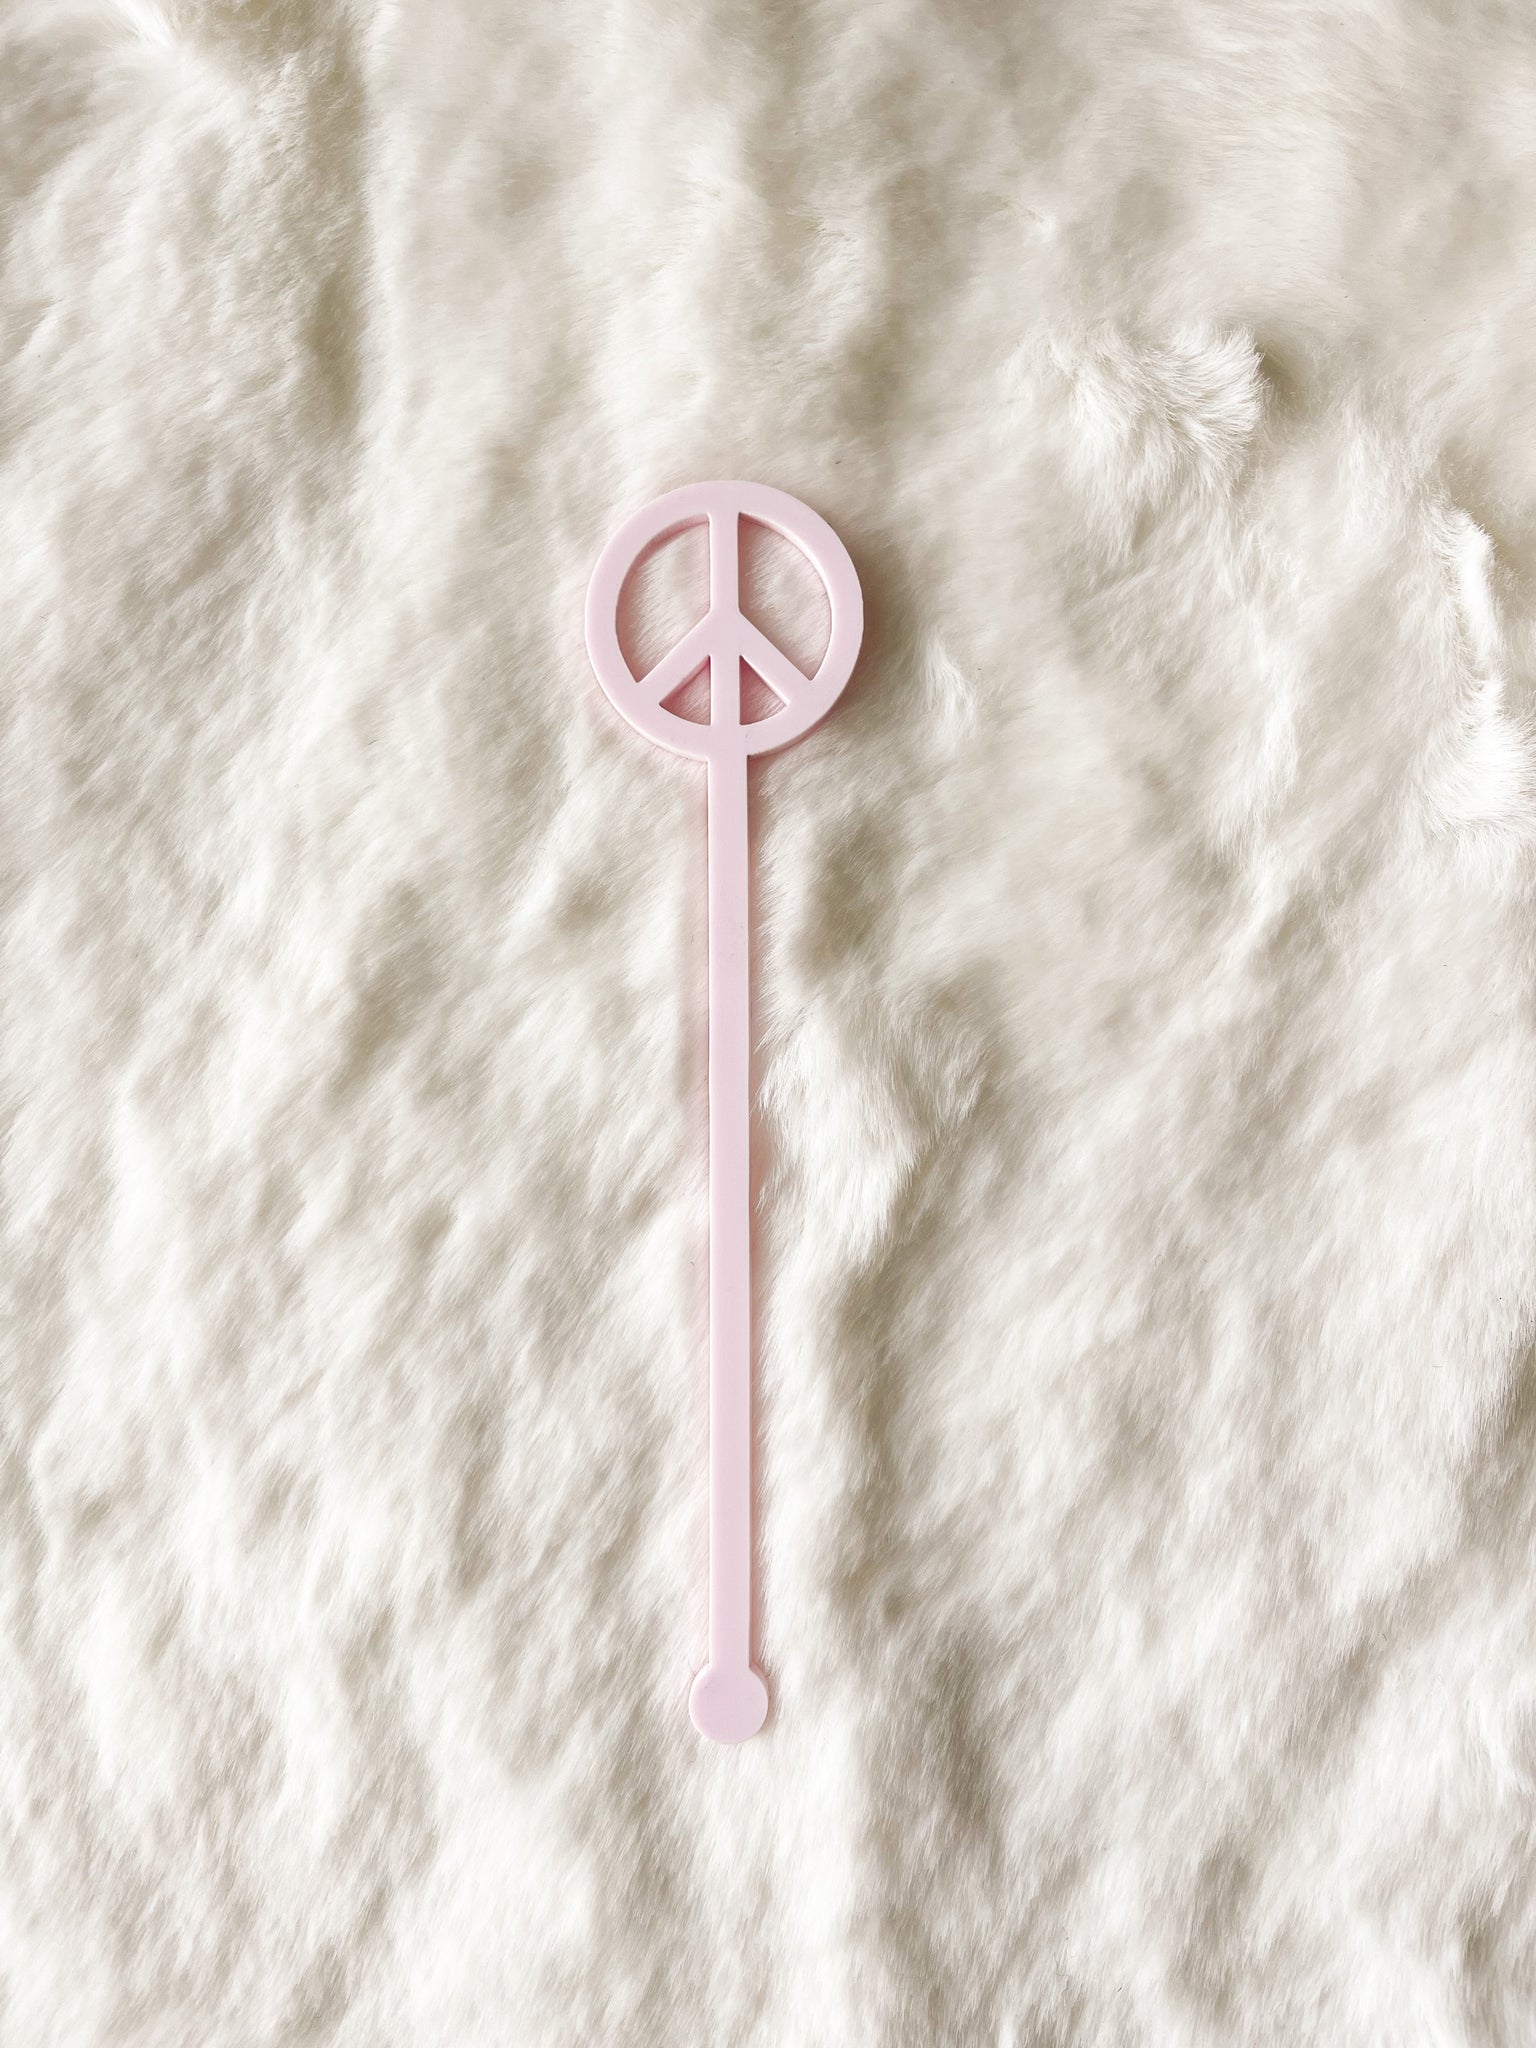 Pale Pink Peace Sign Stir Stick